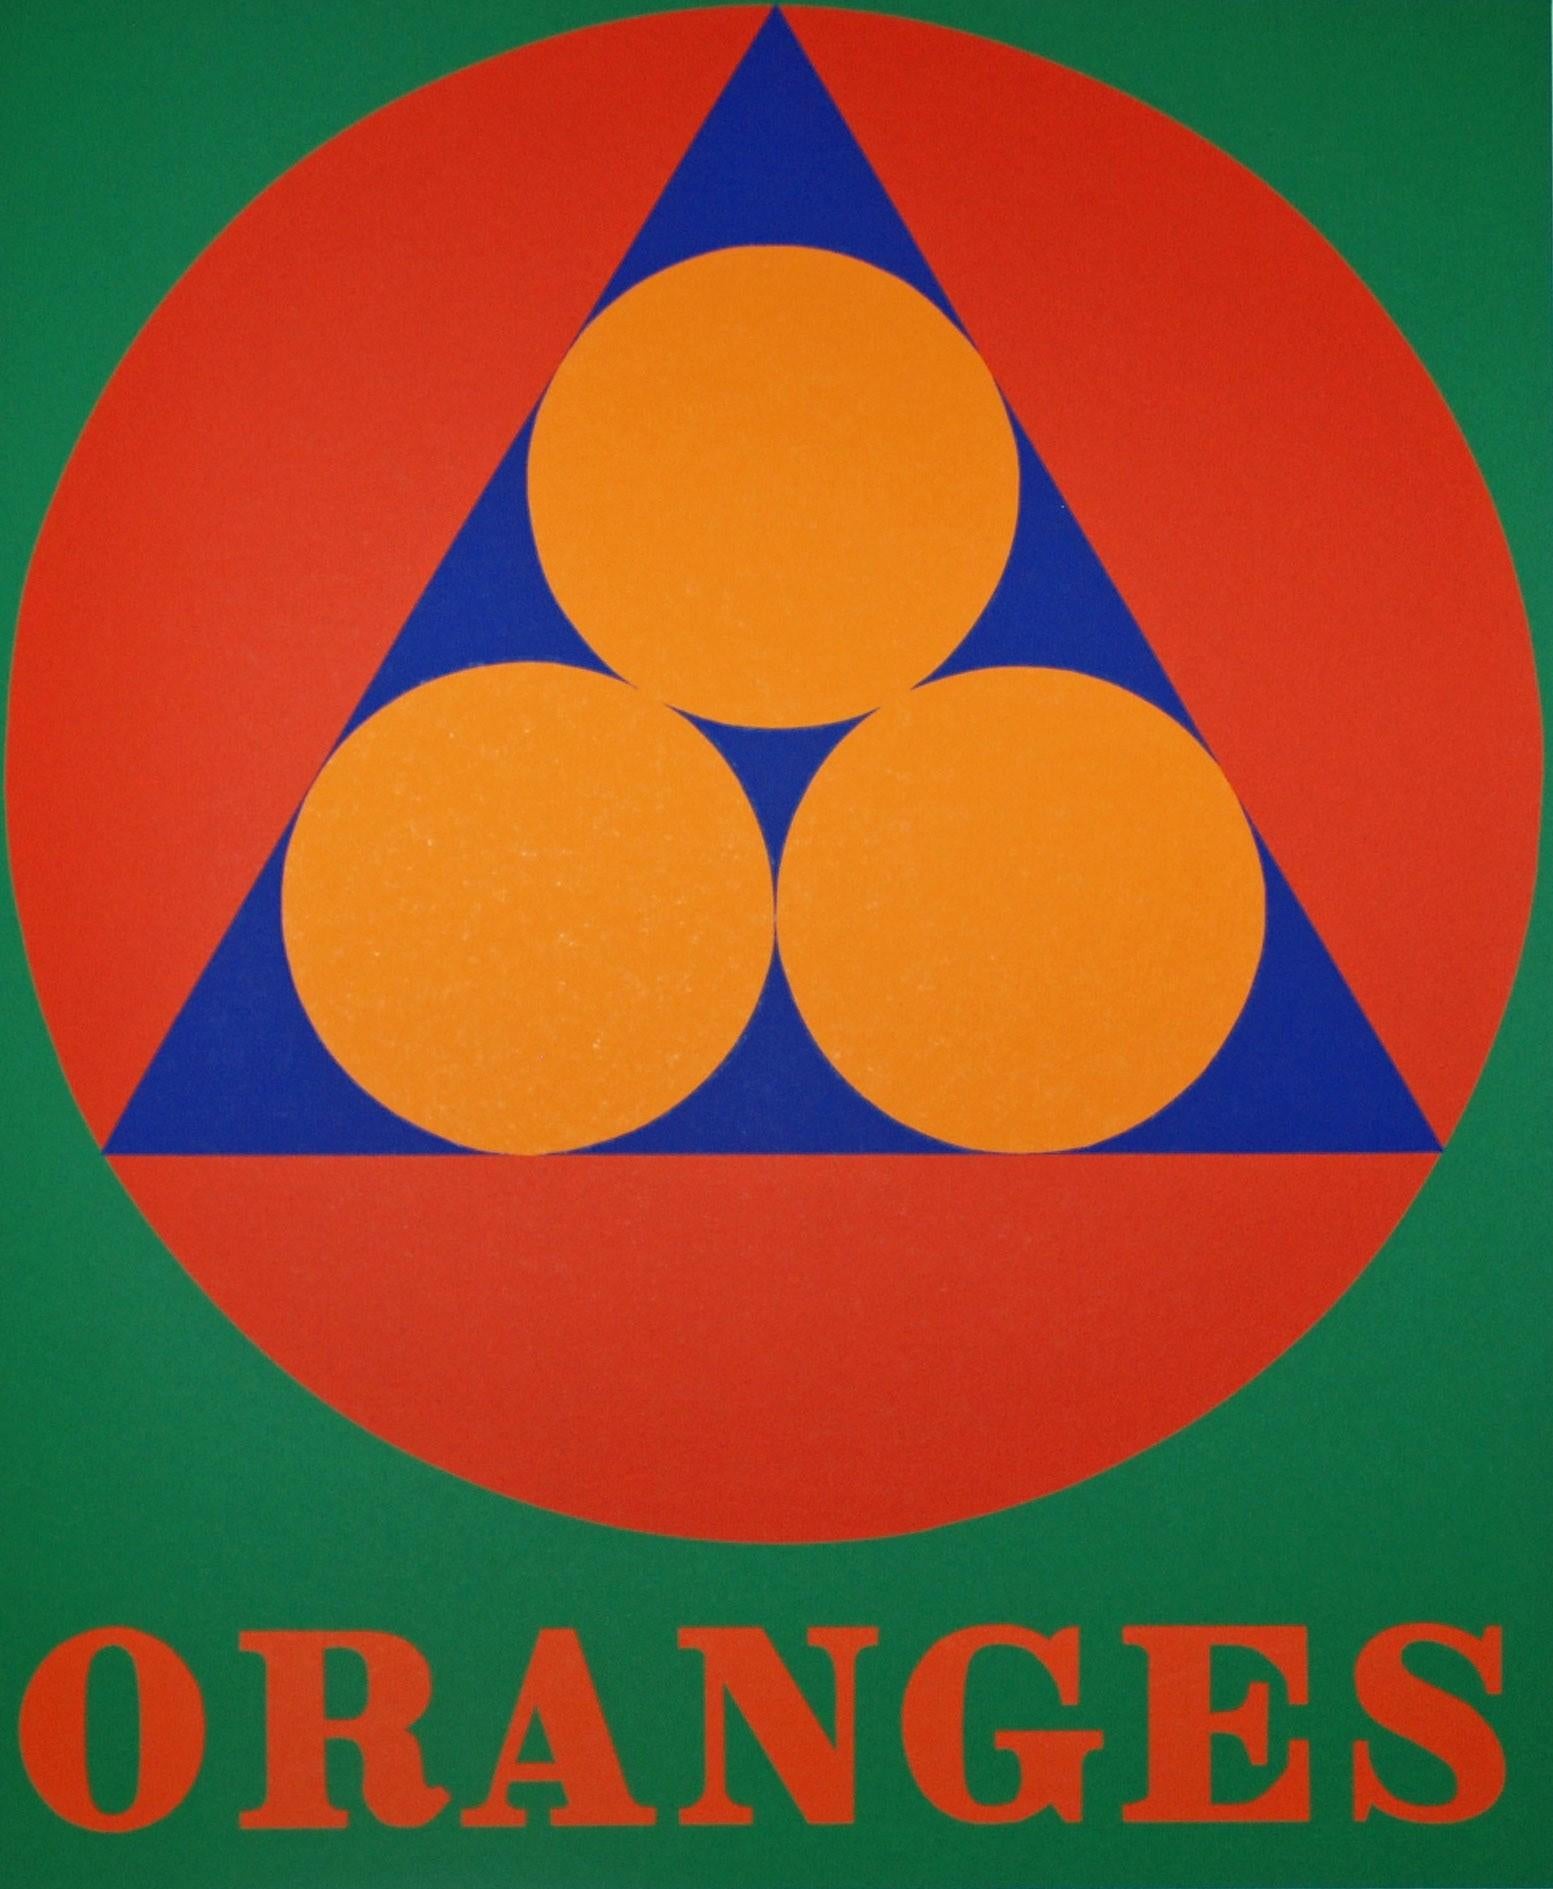 Oranges - Print by Robert Indiana